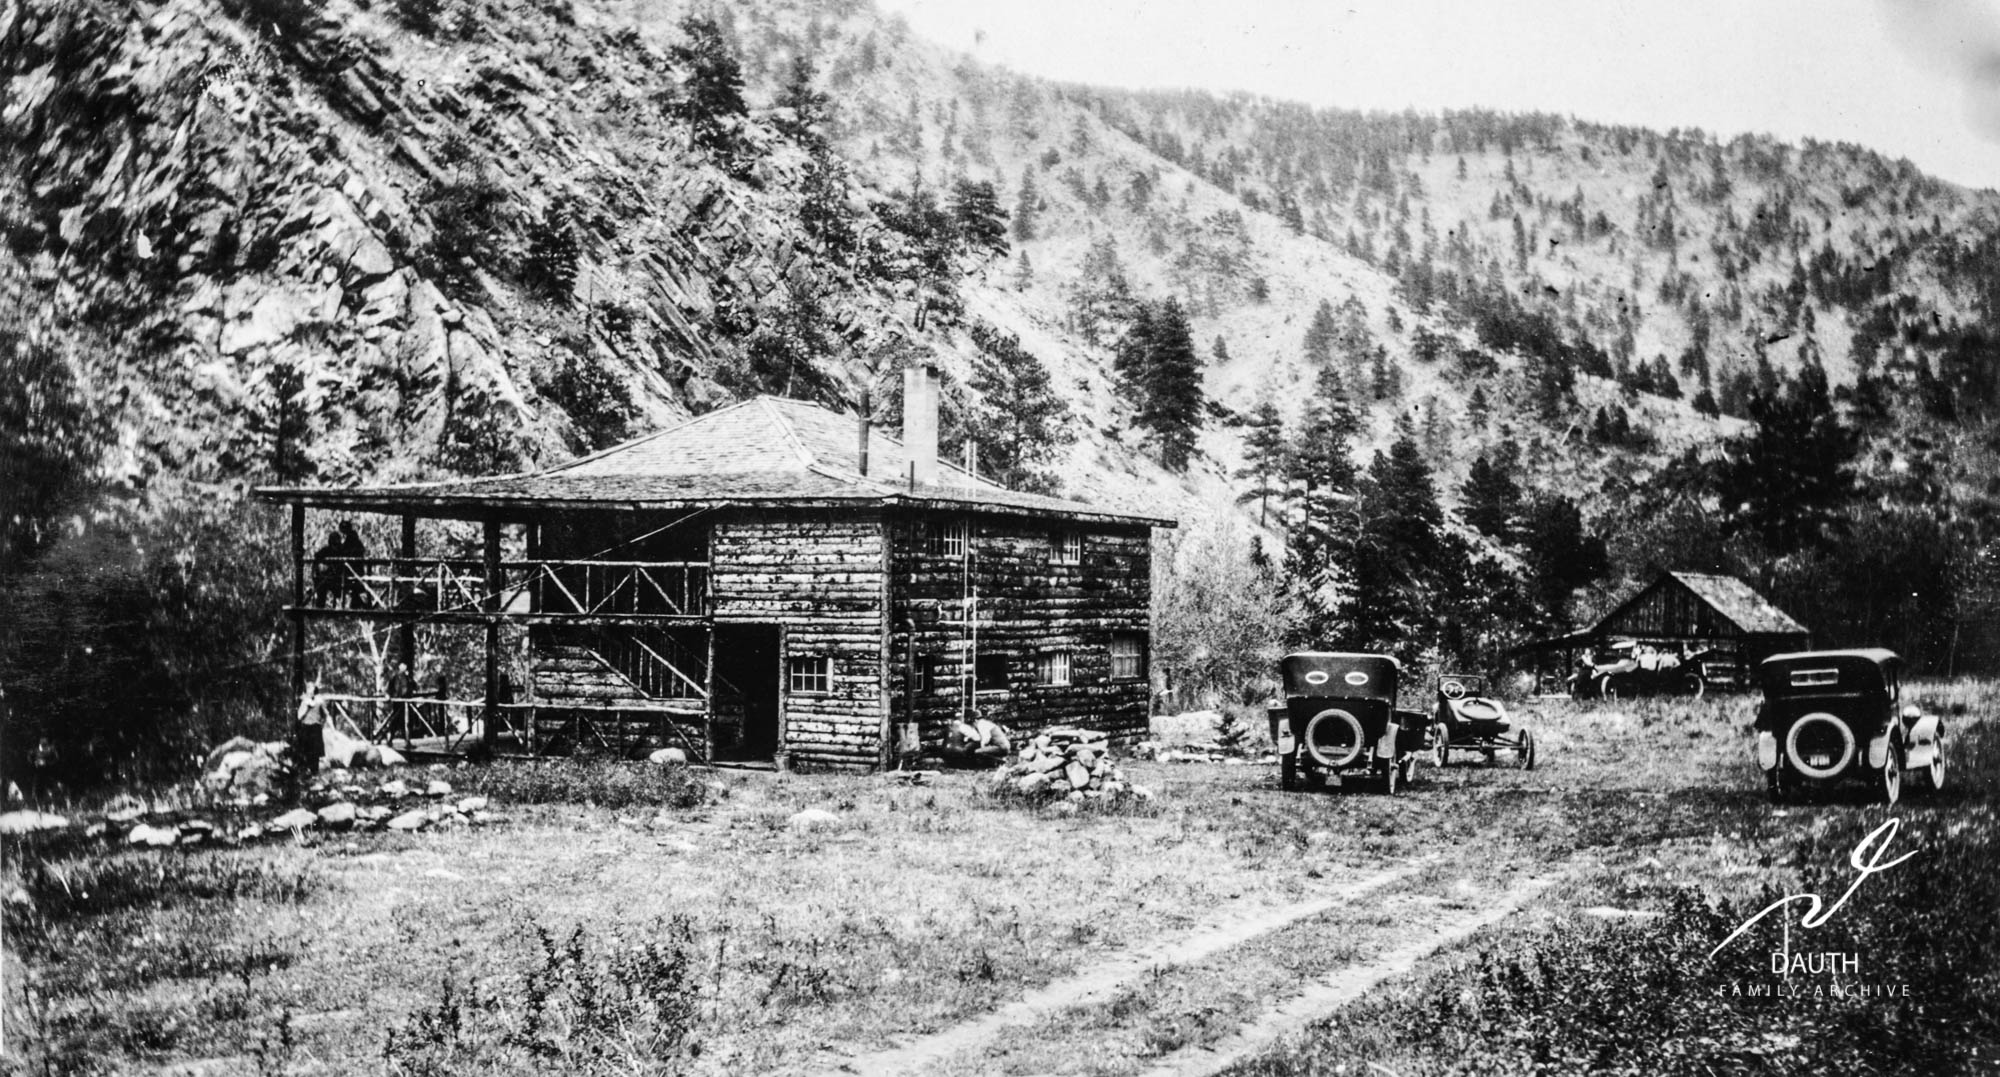 Idlewild Lodge - idlewildlodge.github.io - Circa 1920 - Panorama of Idlewild Lodge - Looking East